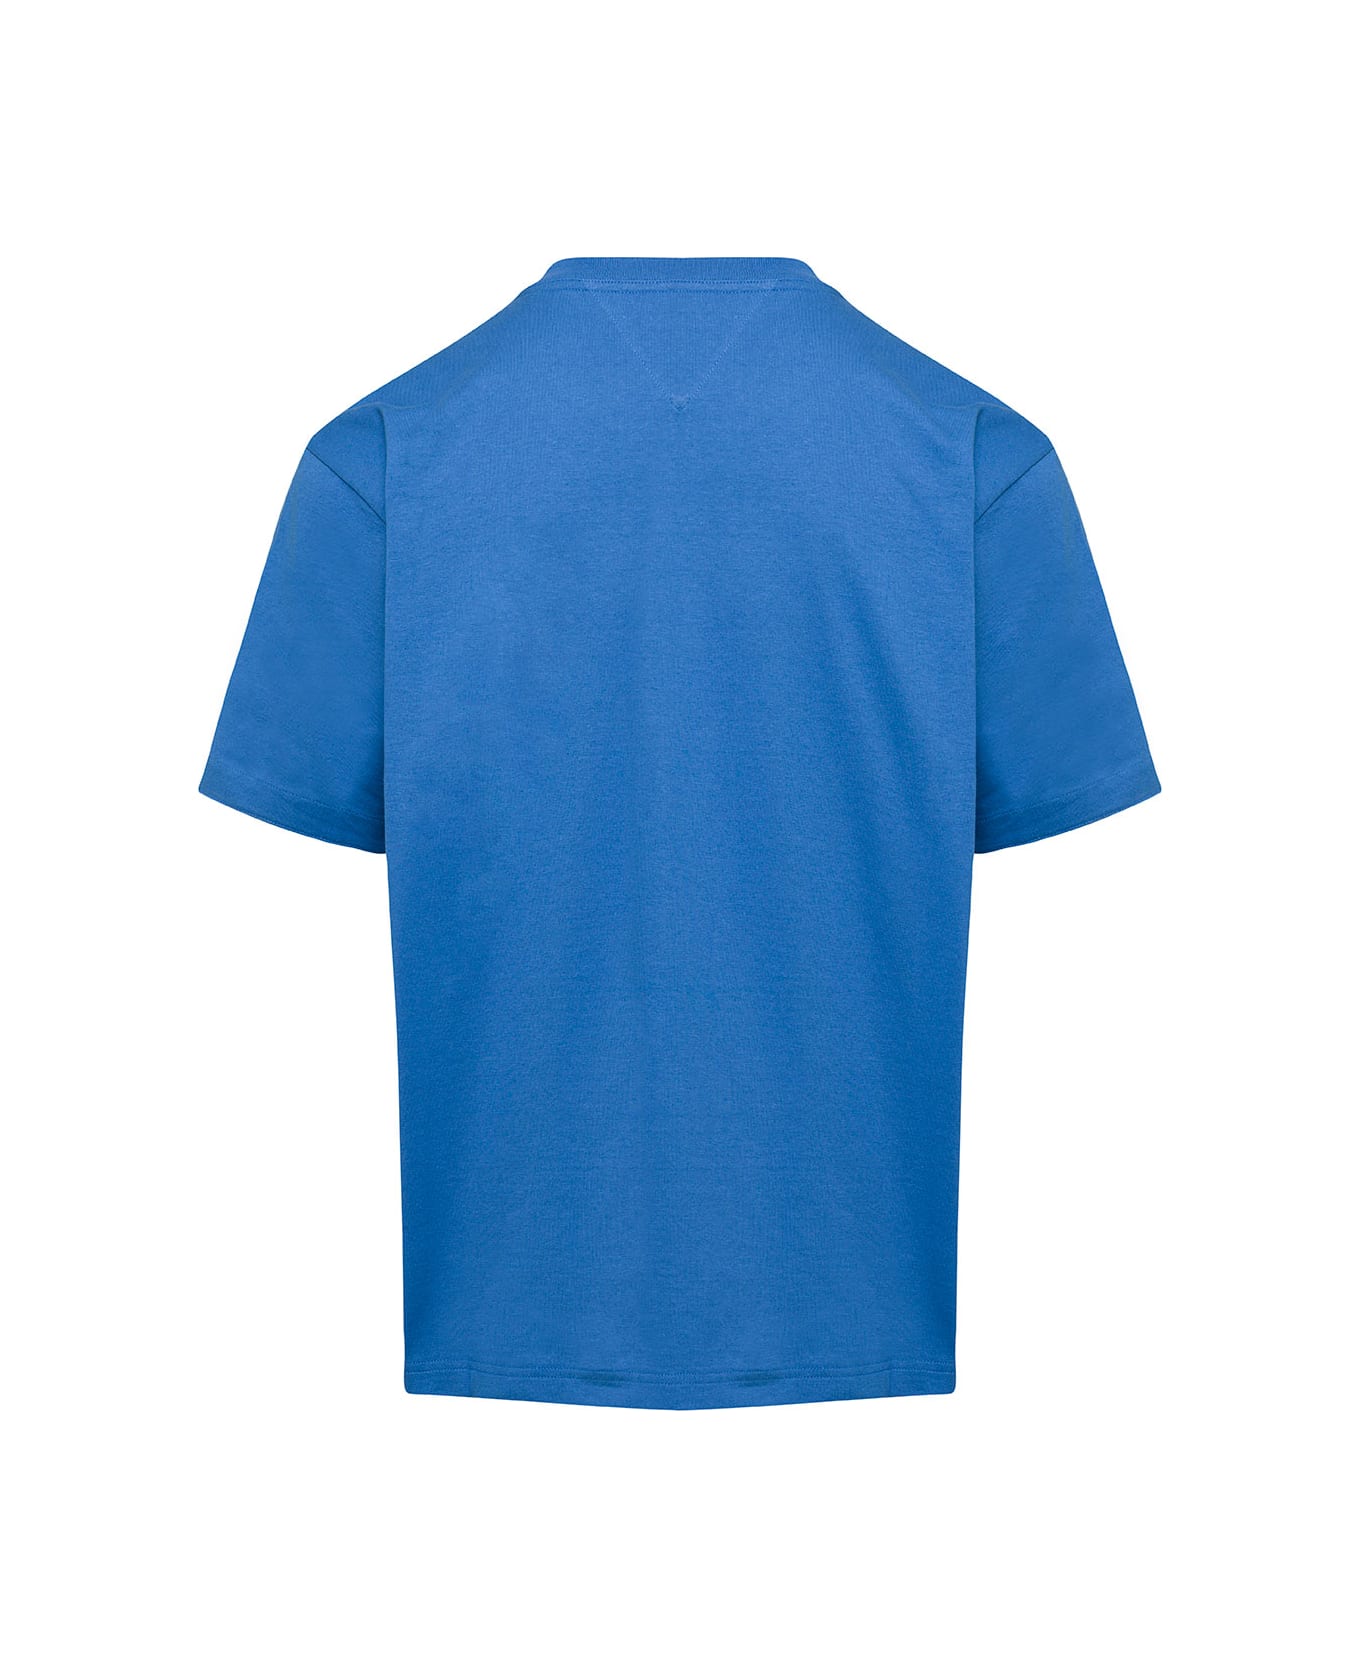 Bottega Veneta Sunrise Cotton T-shirt - Surf